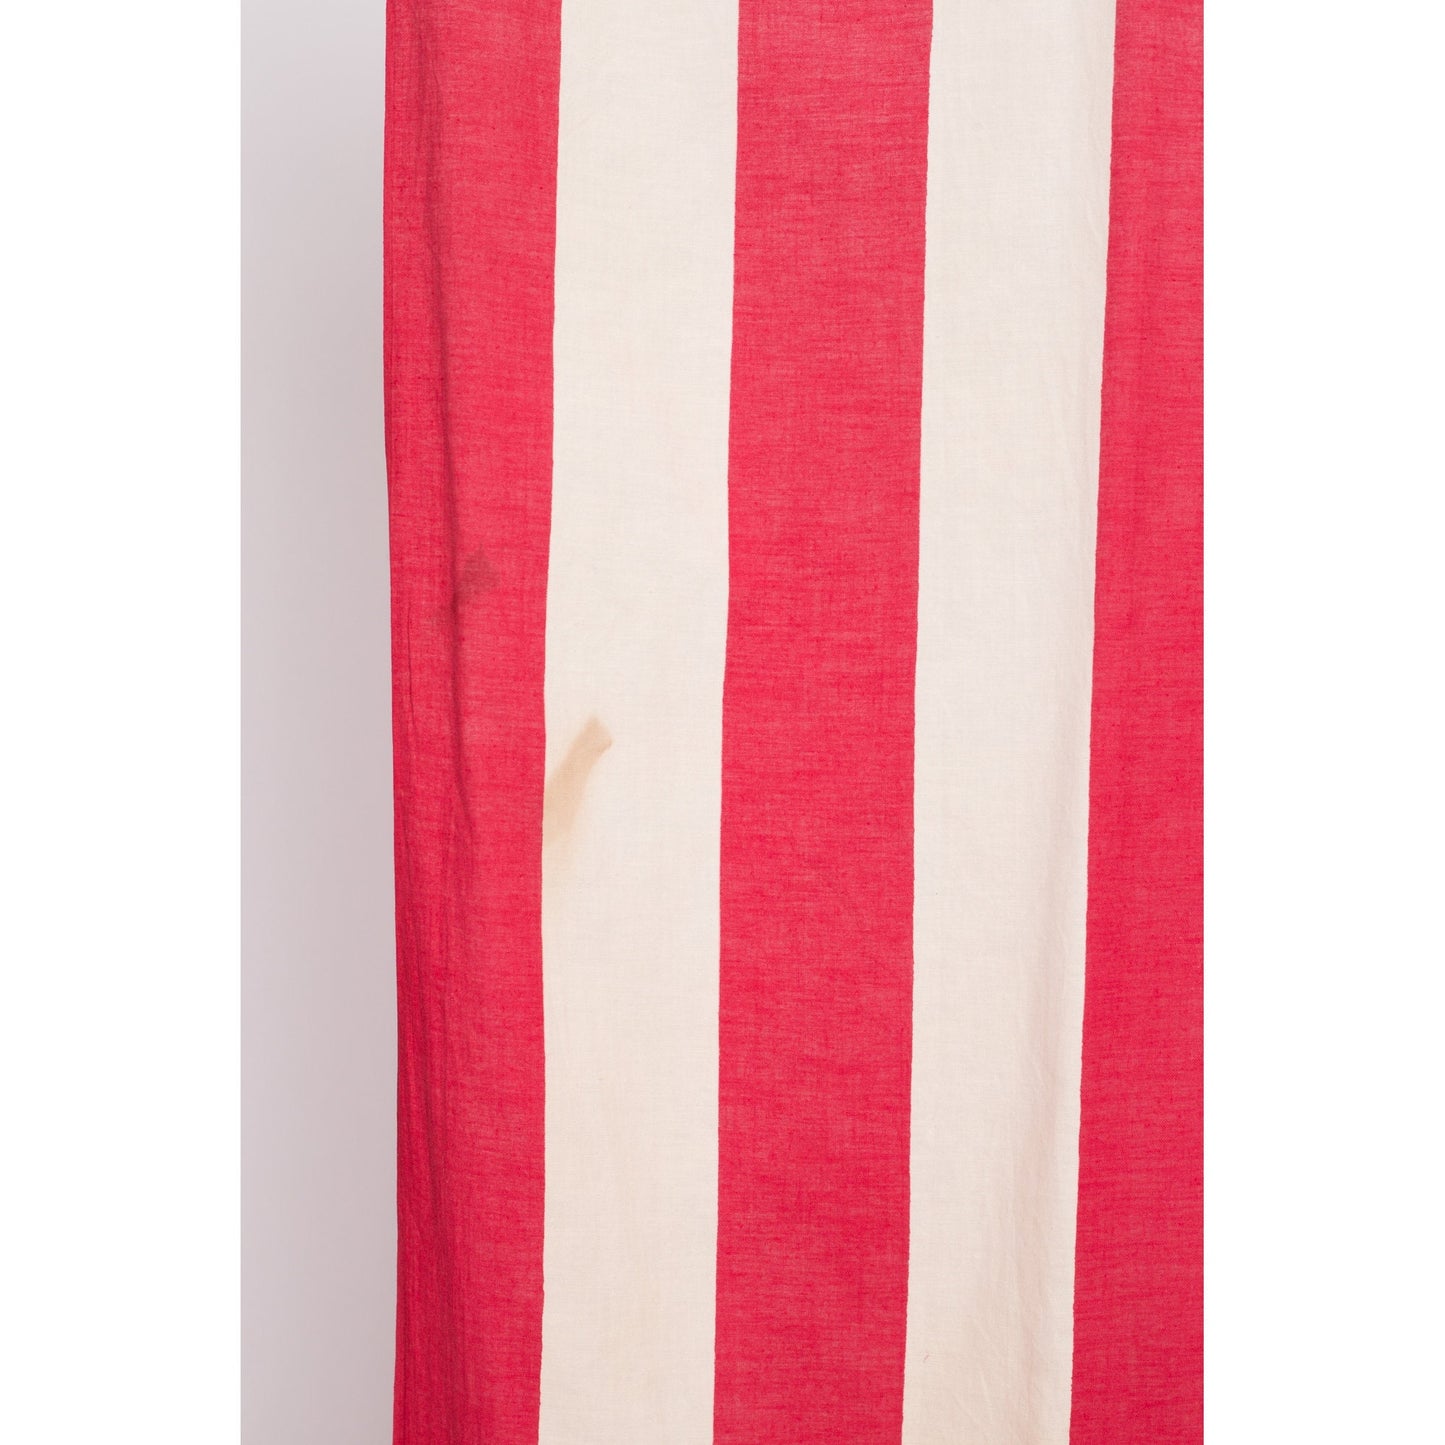 Vintage Cotton American Flag - 3'x5'